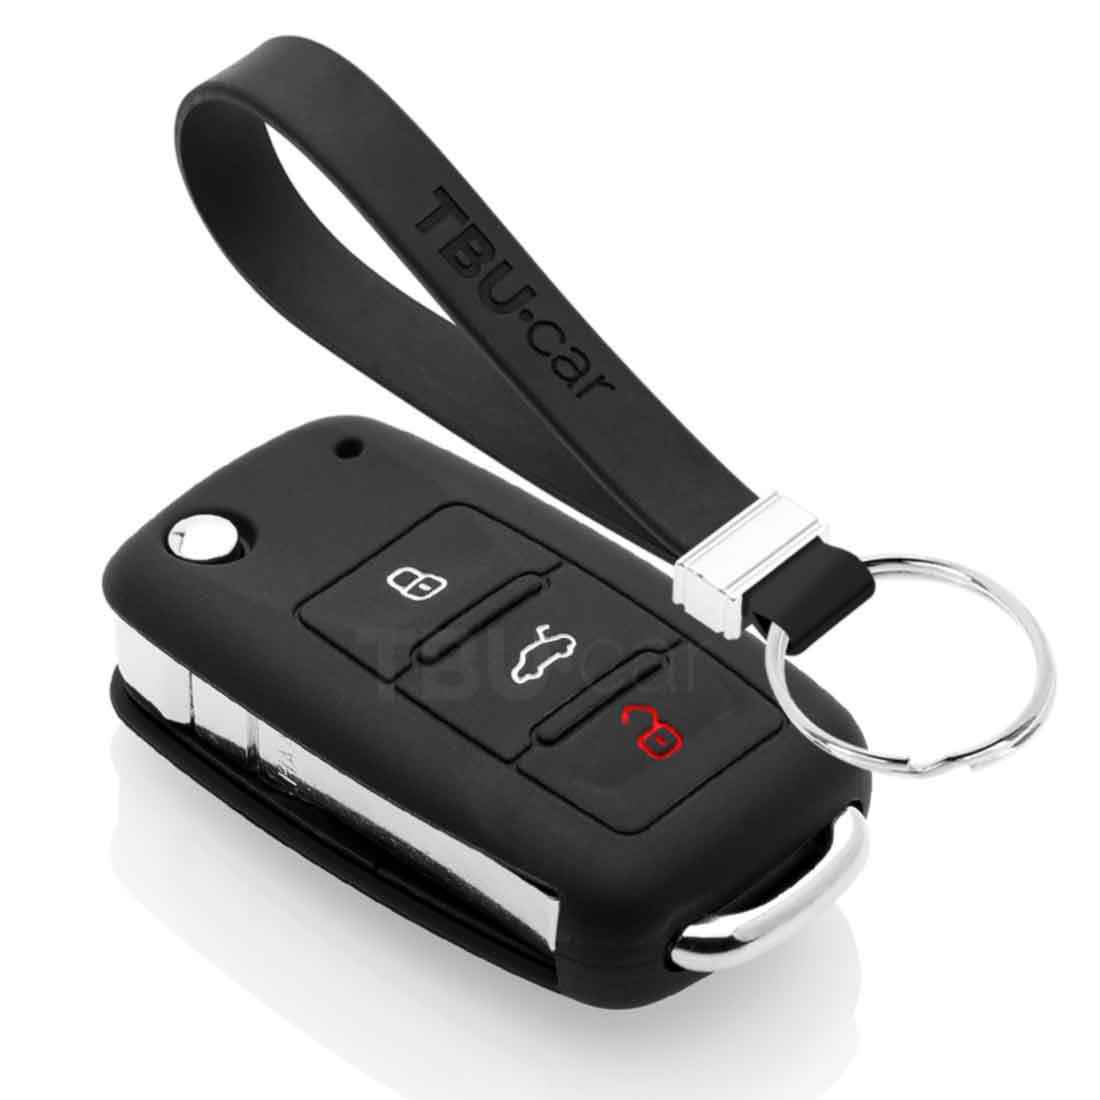 TBU car TBU car Autoschlüssel Hülle kompatibel mit Audi 3 Tasten - Schutzhülle aus Silikon - Auto Schlüsselhülle Cover in Schwarz